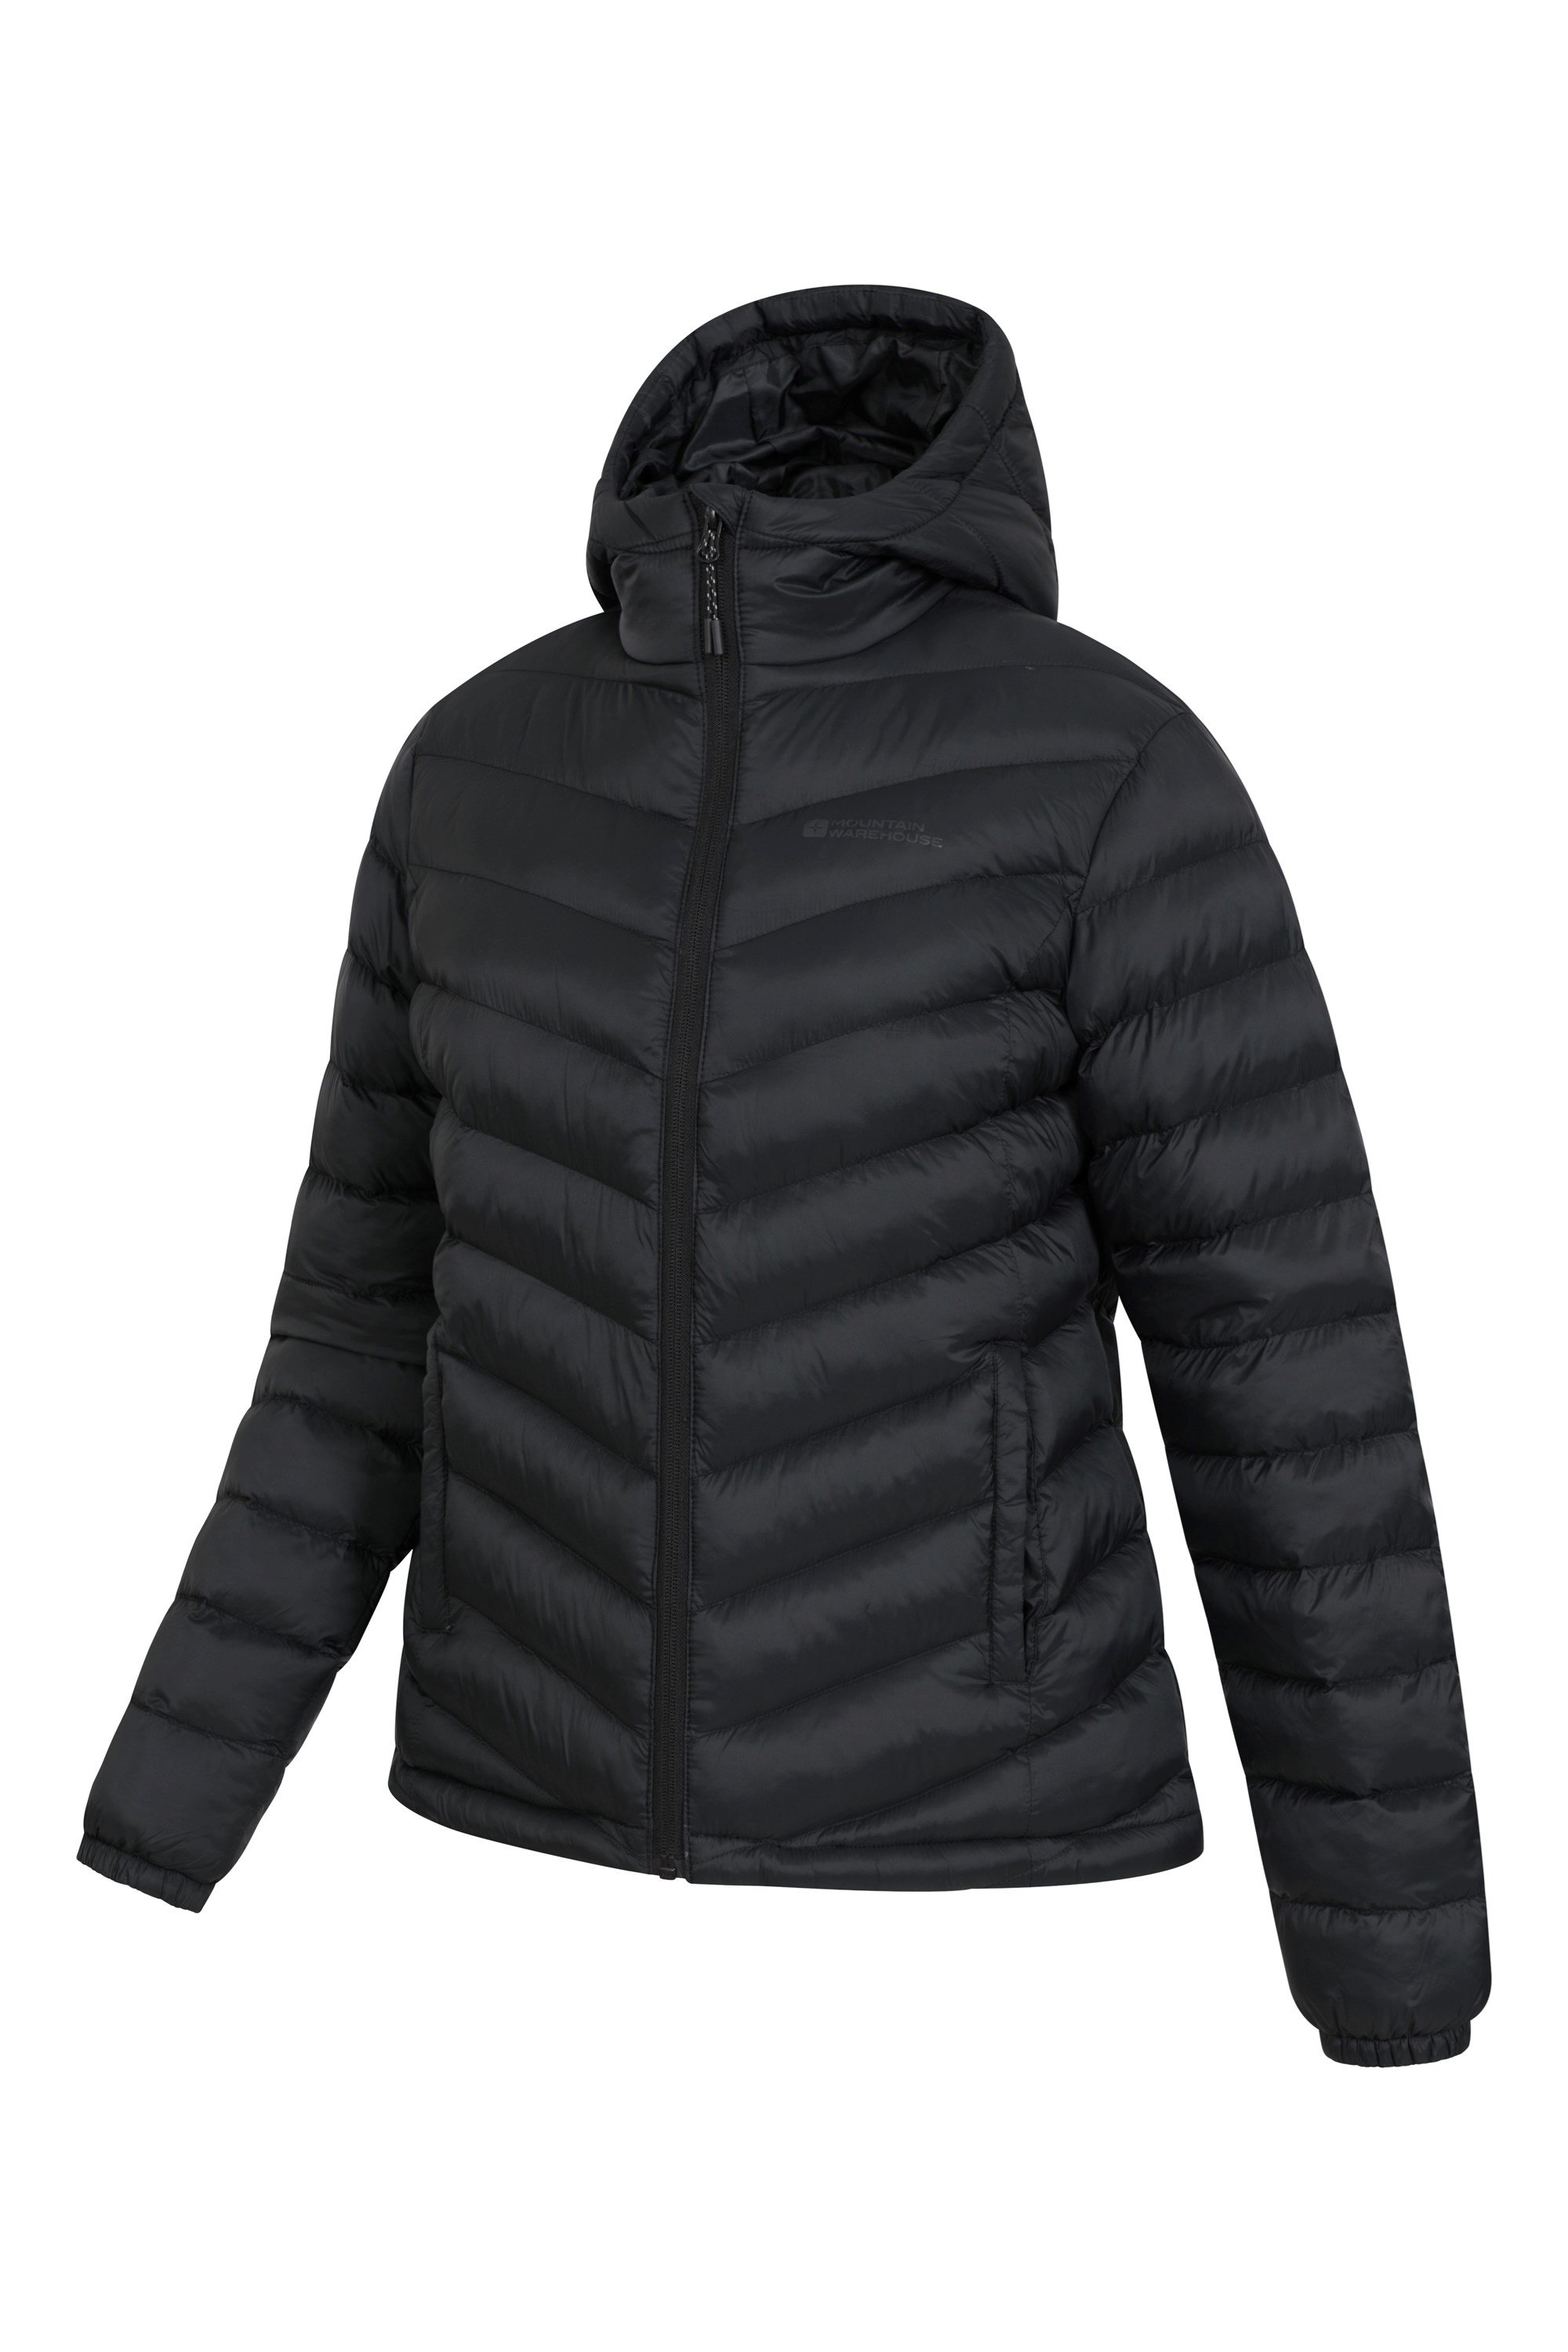 Mountain Warehouse Seasons Women's Padded Winter Jacket Ladies Water  Resistant